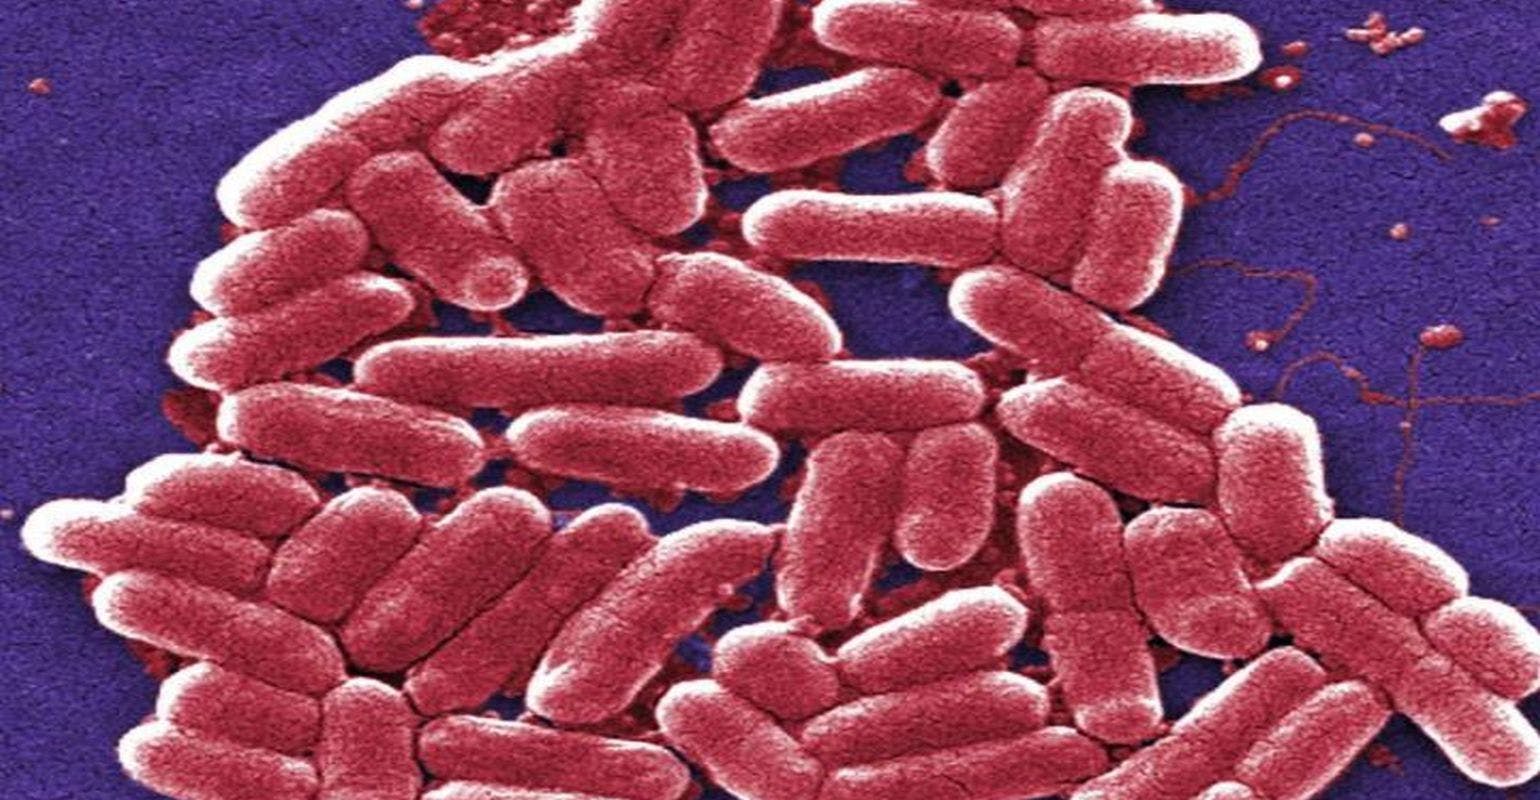 Bacteria Bide Their Time When Antibiotics Attack